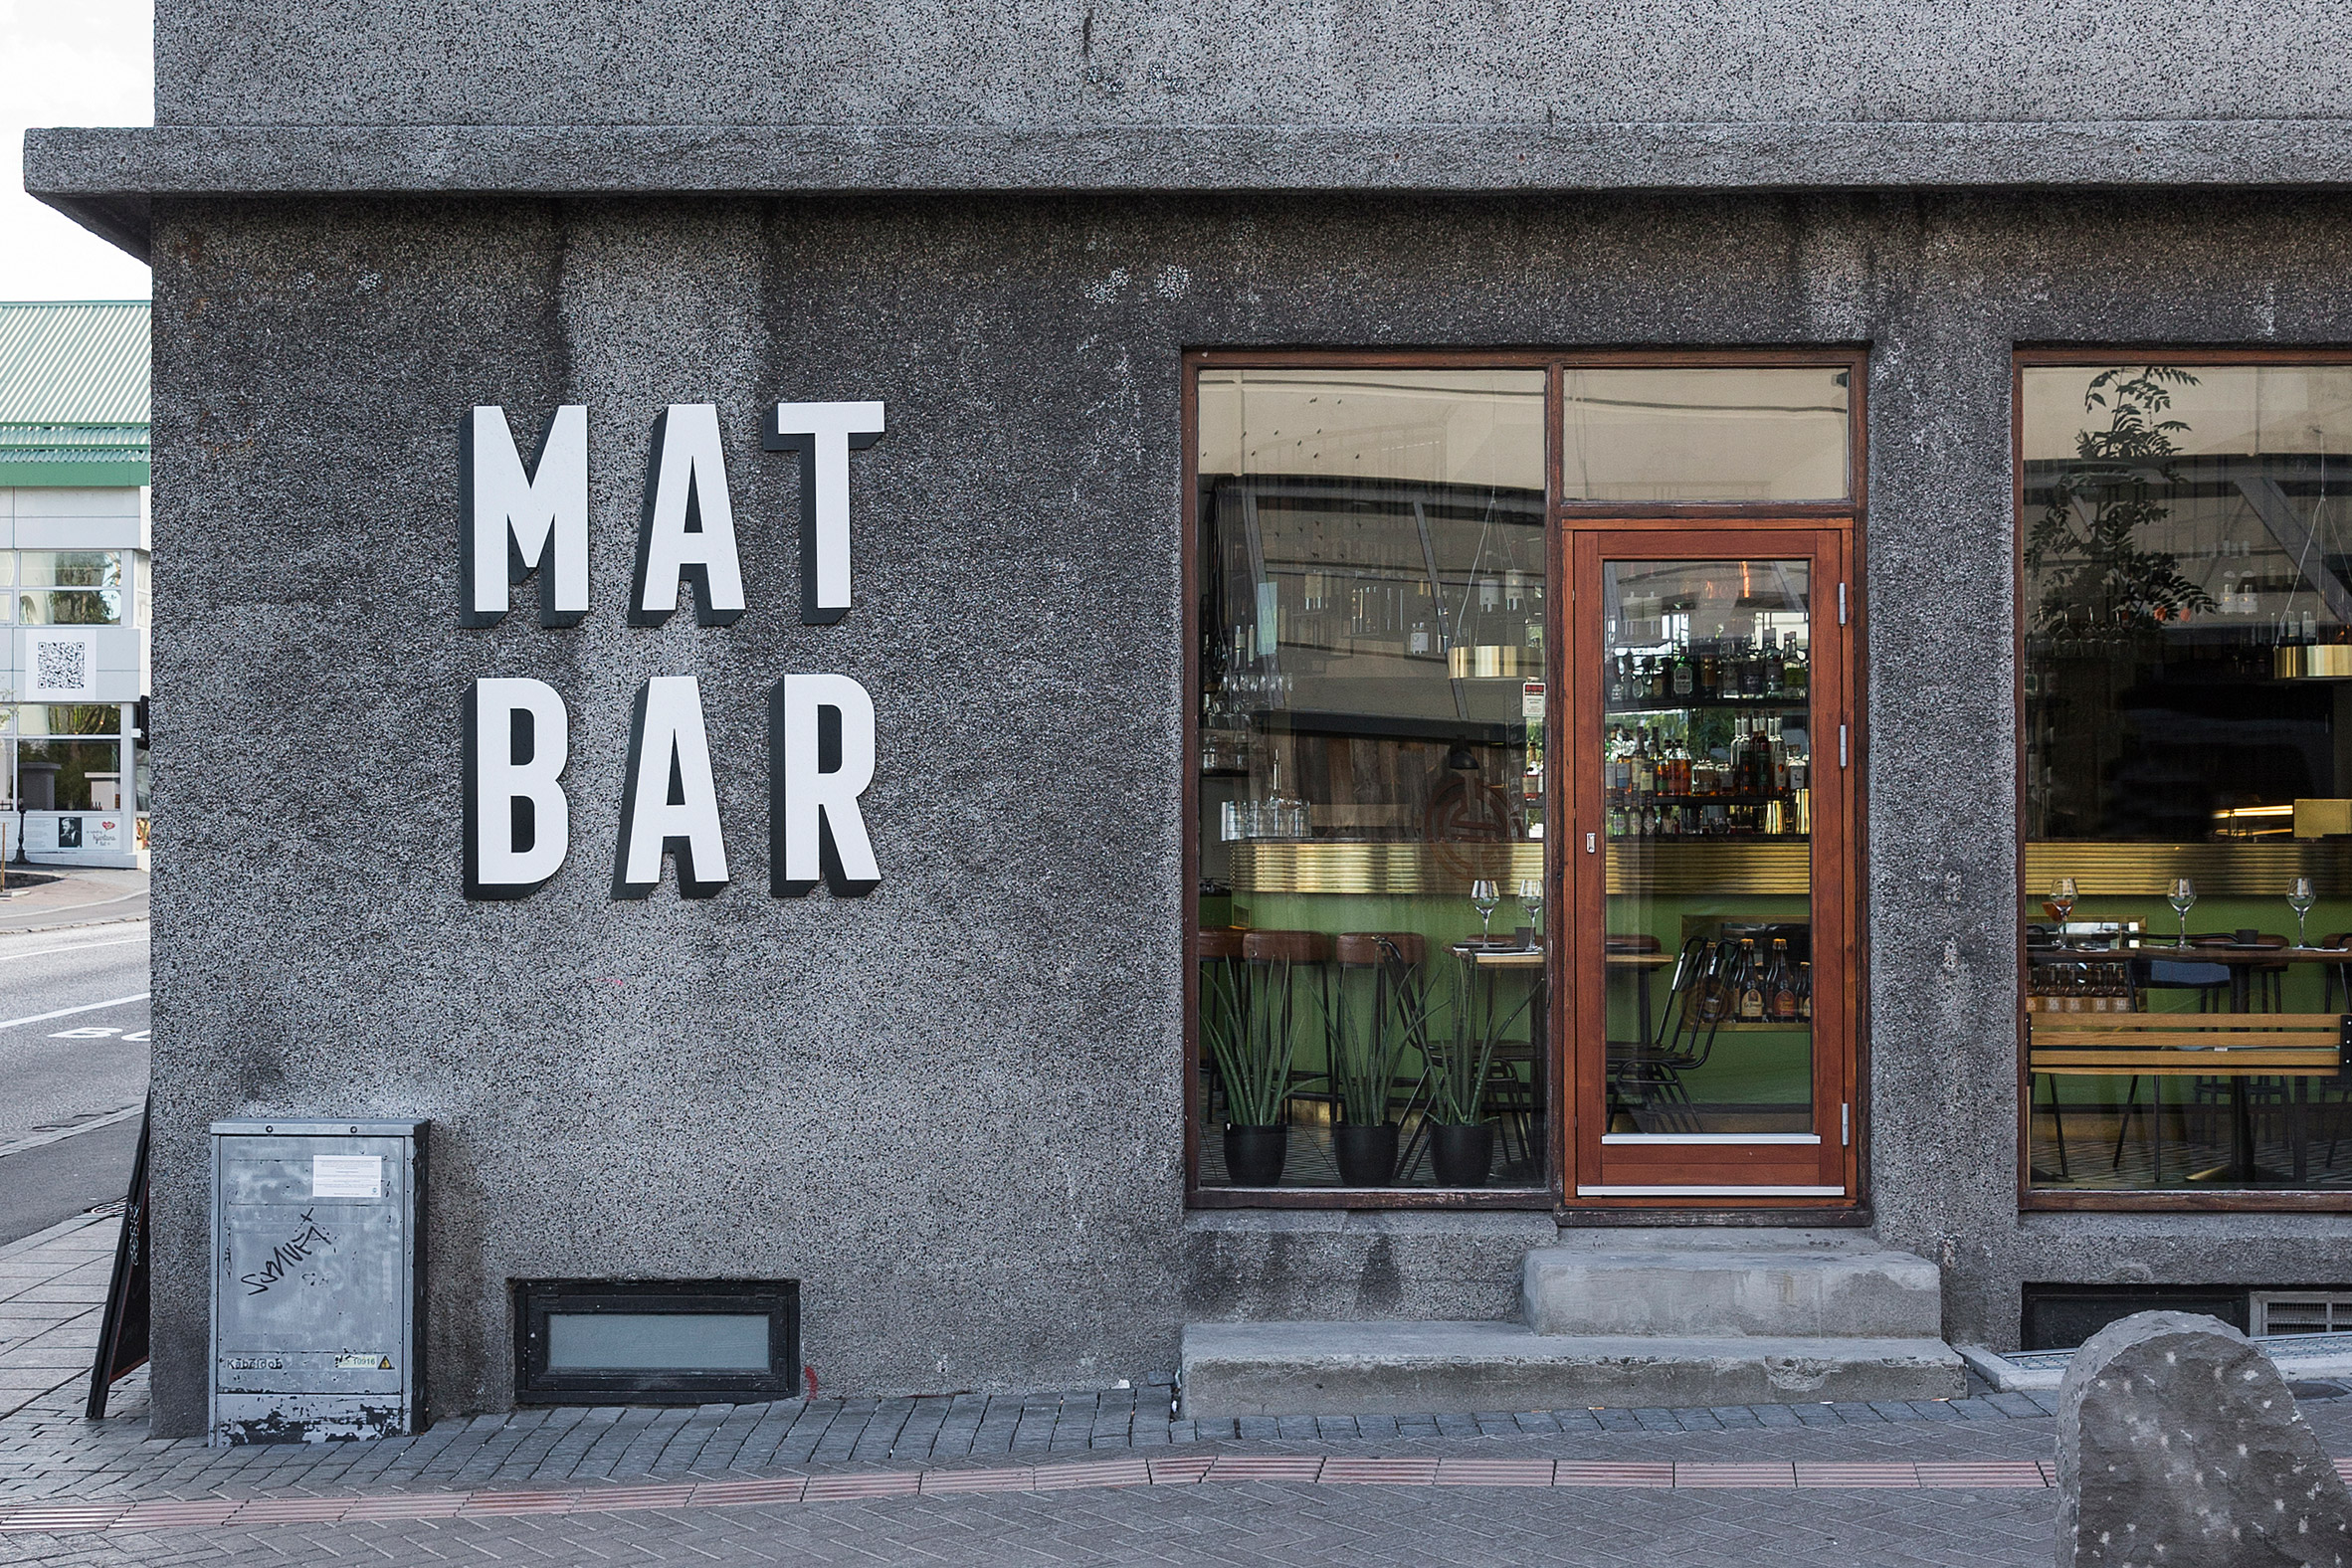 Mat Bar by Haf Studio